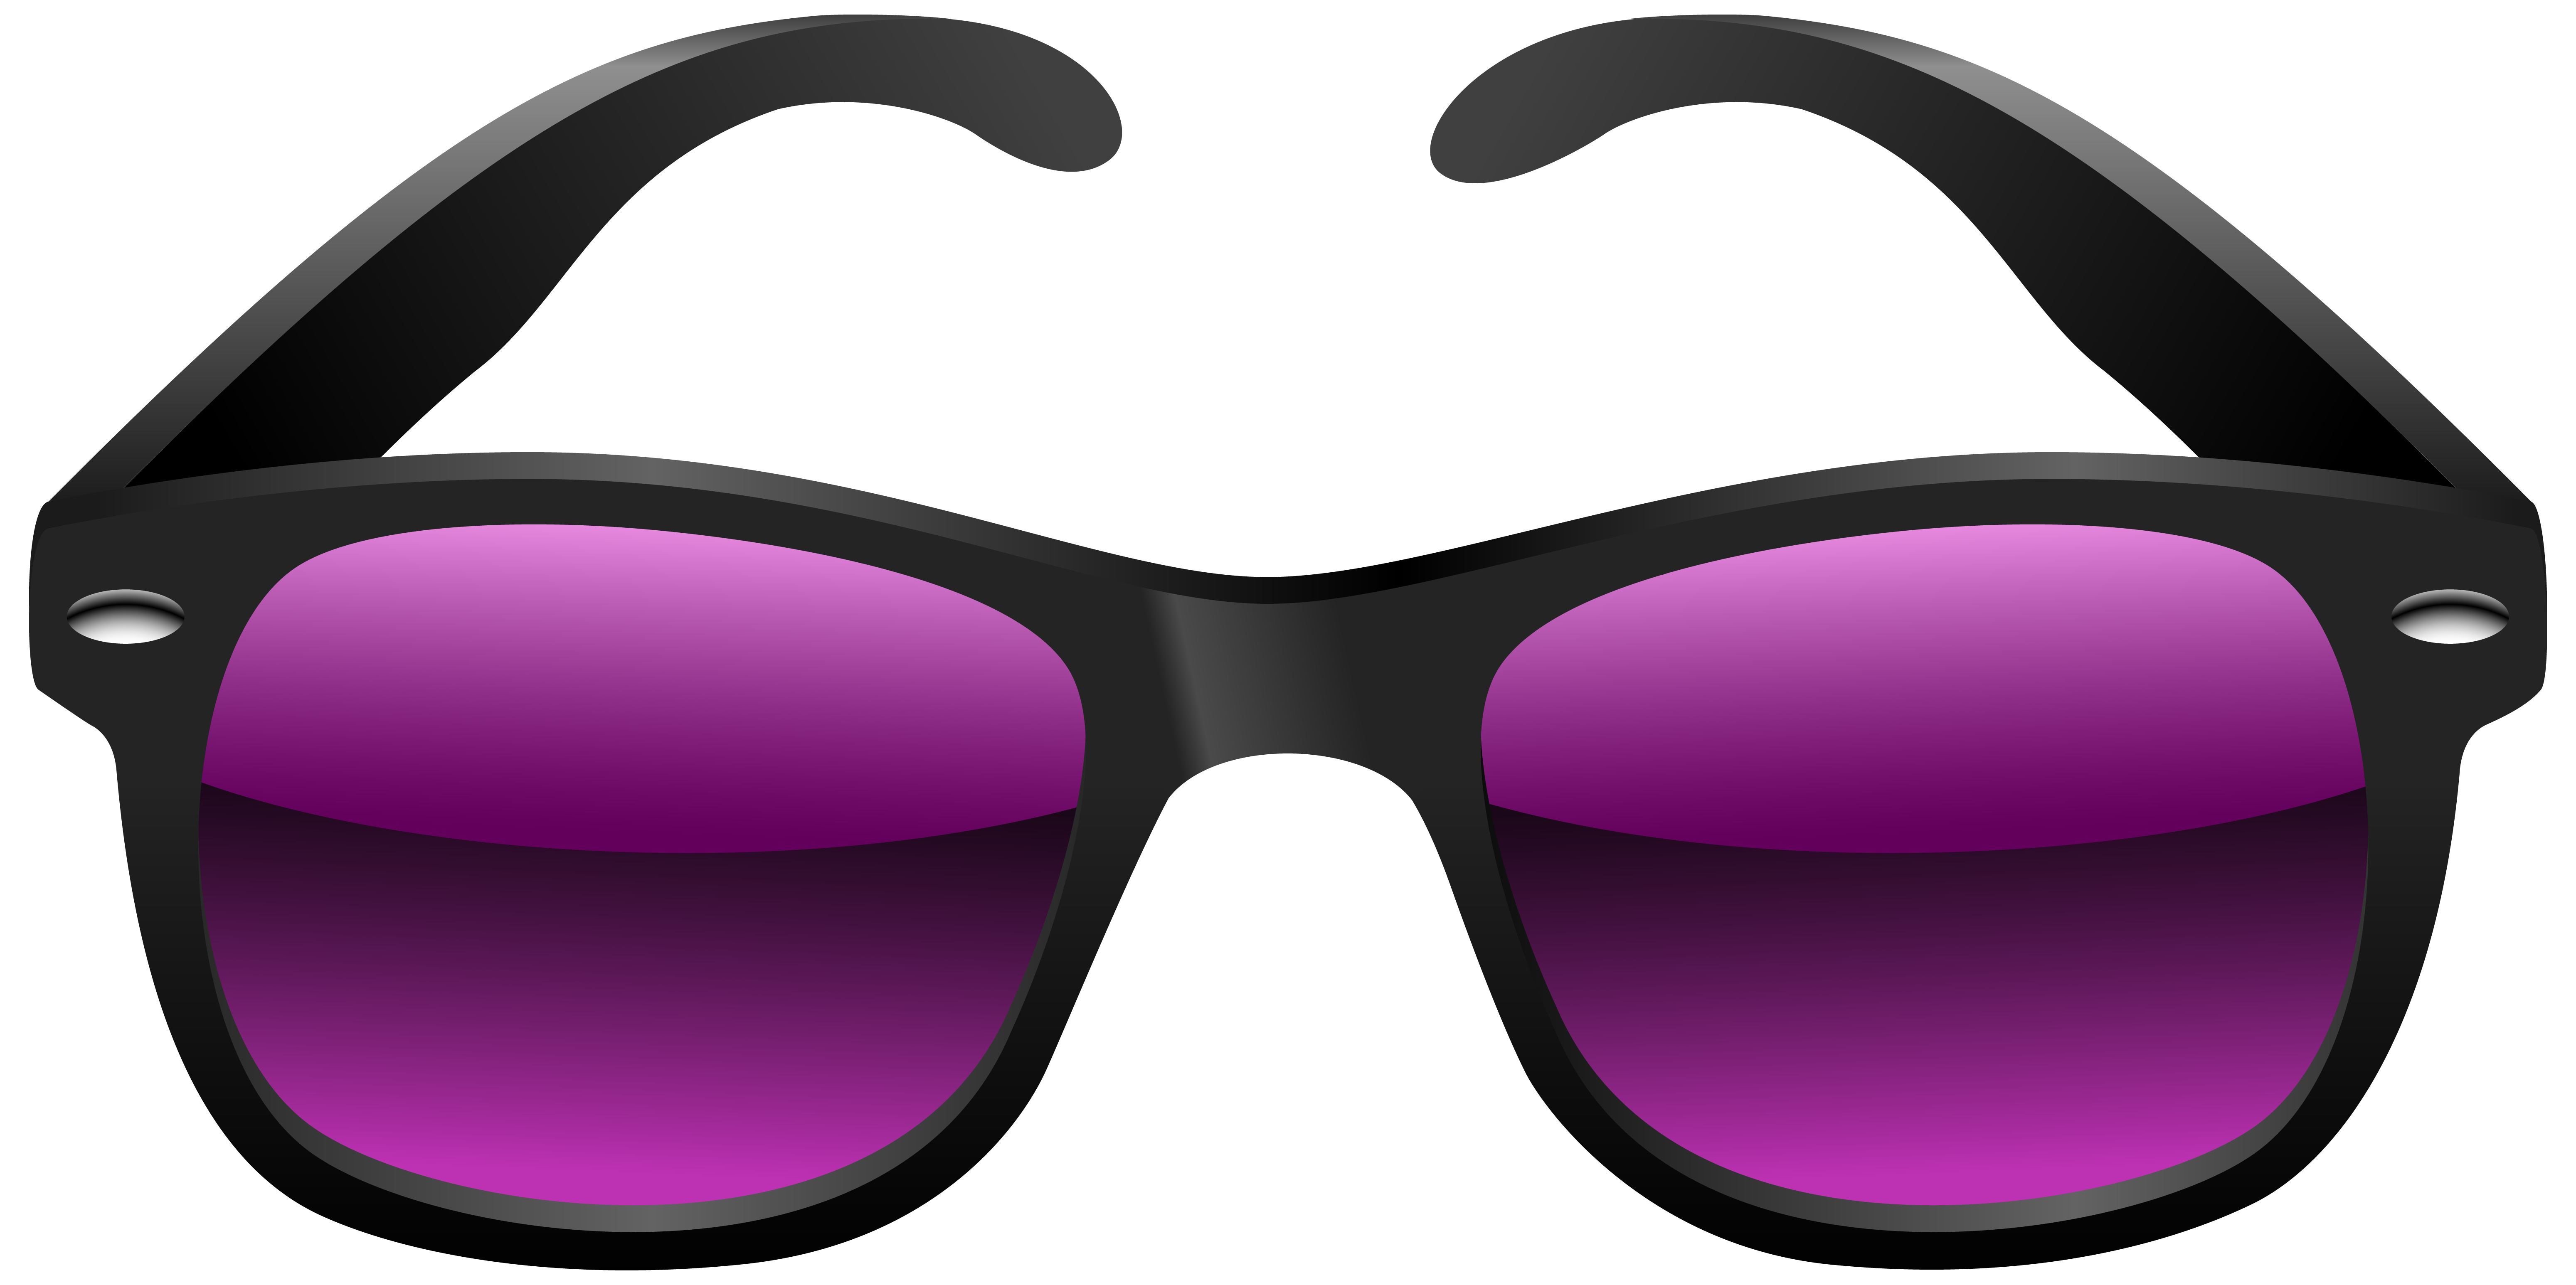 Sunglasses Clip art - Black and Purple Sunglasses PNG Clipart Image png ...